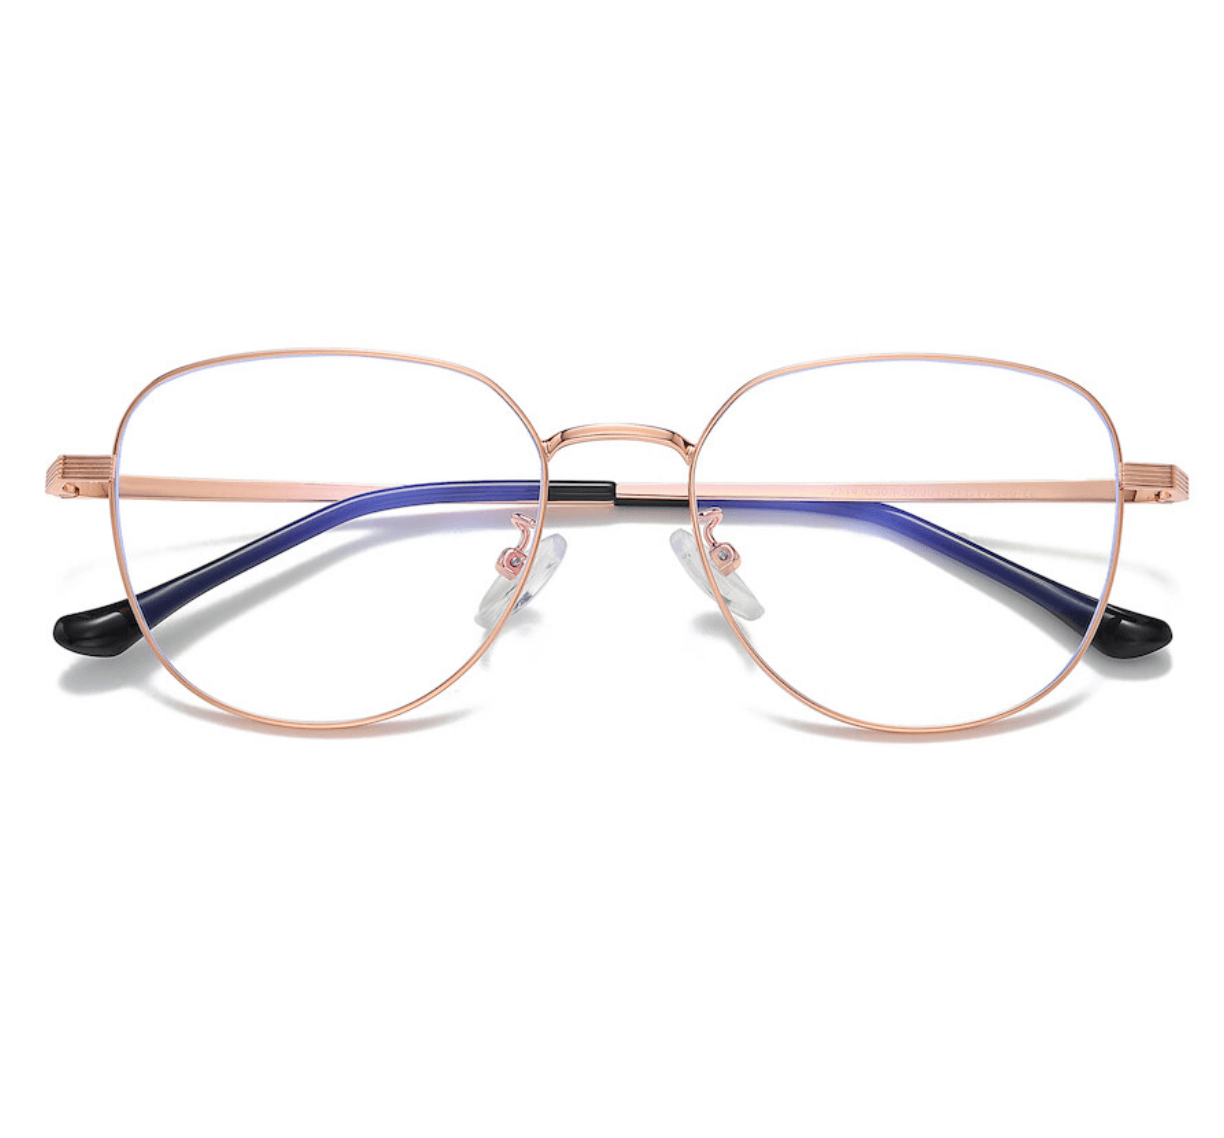 metal glasses frames for women and men, Optical frames factory, wholesale eyewear frames, custom eyeglass frames